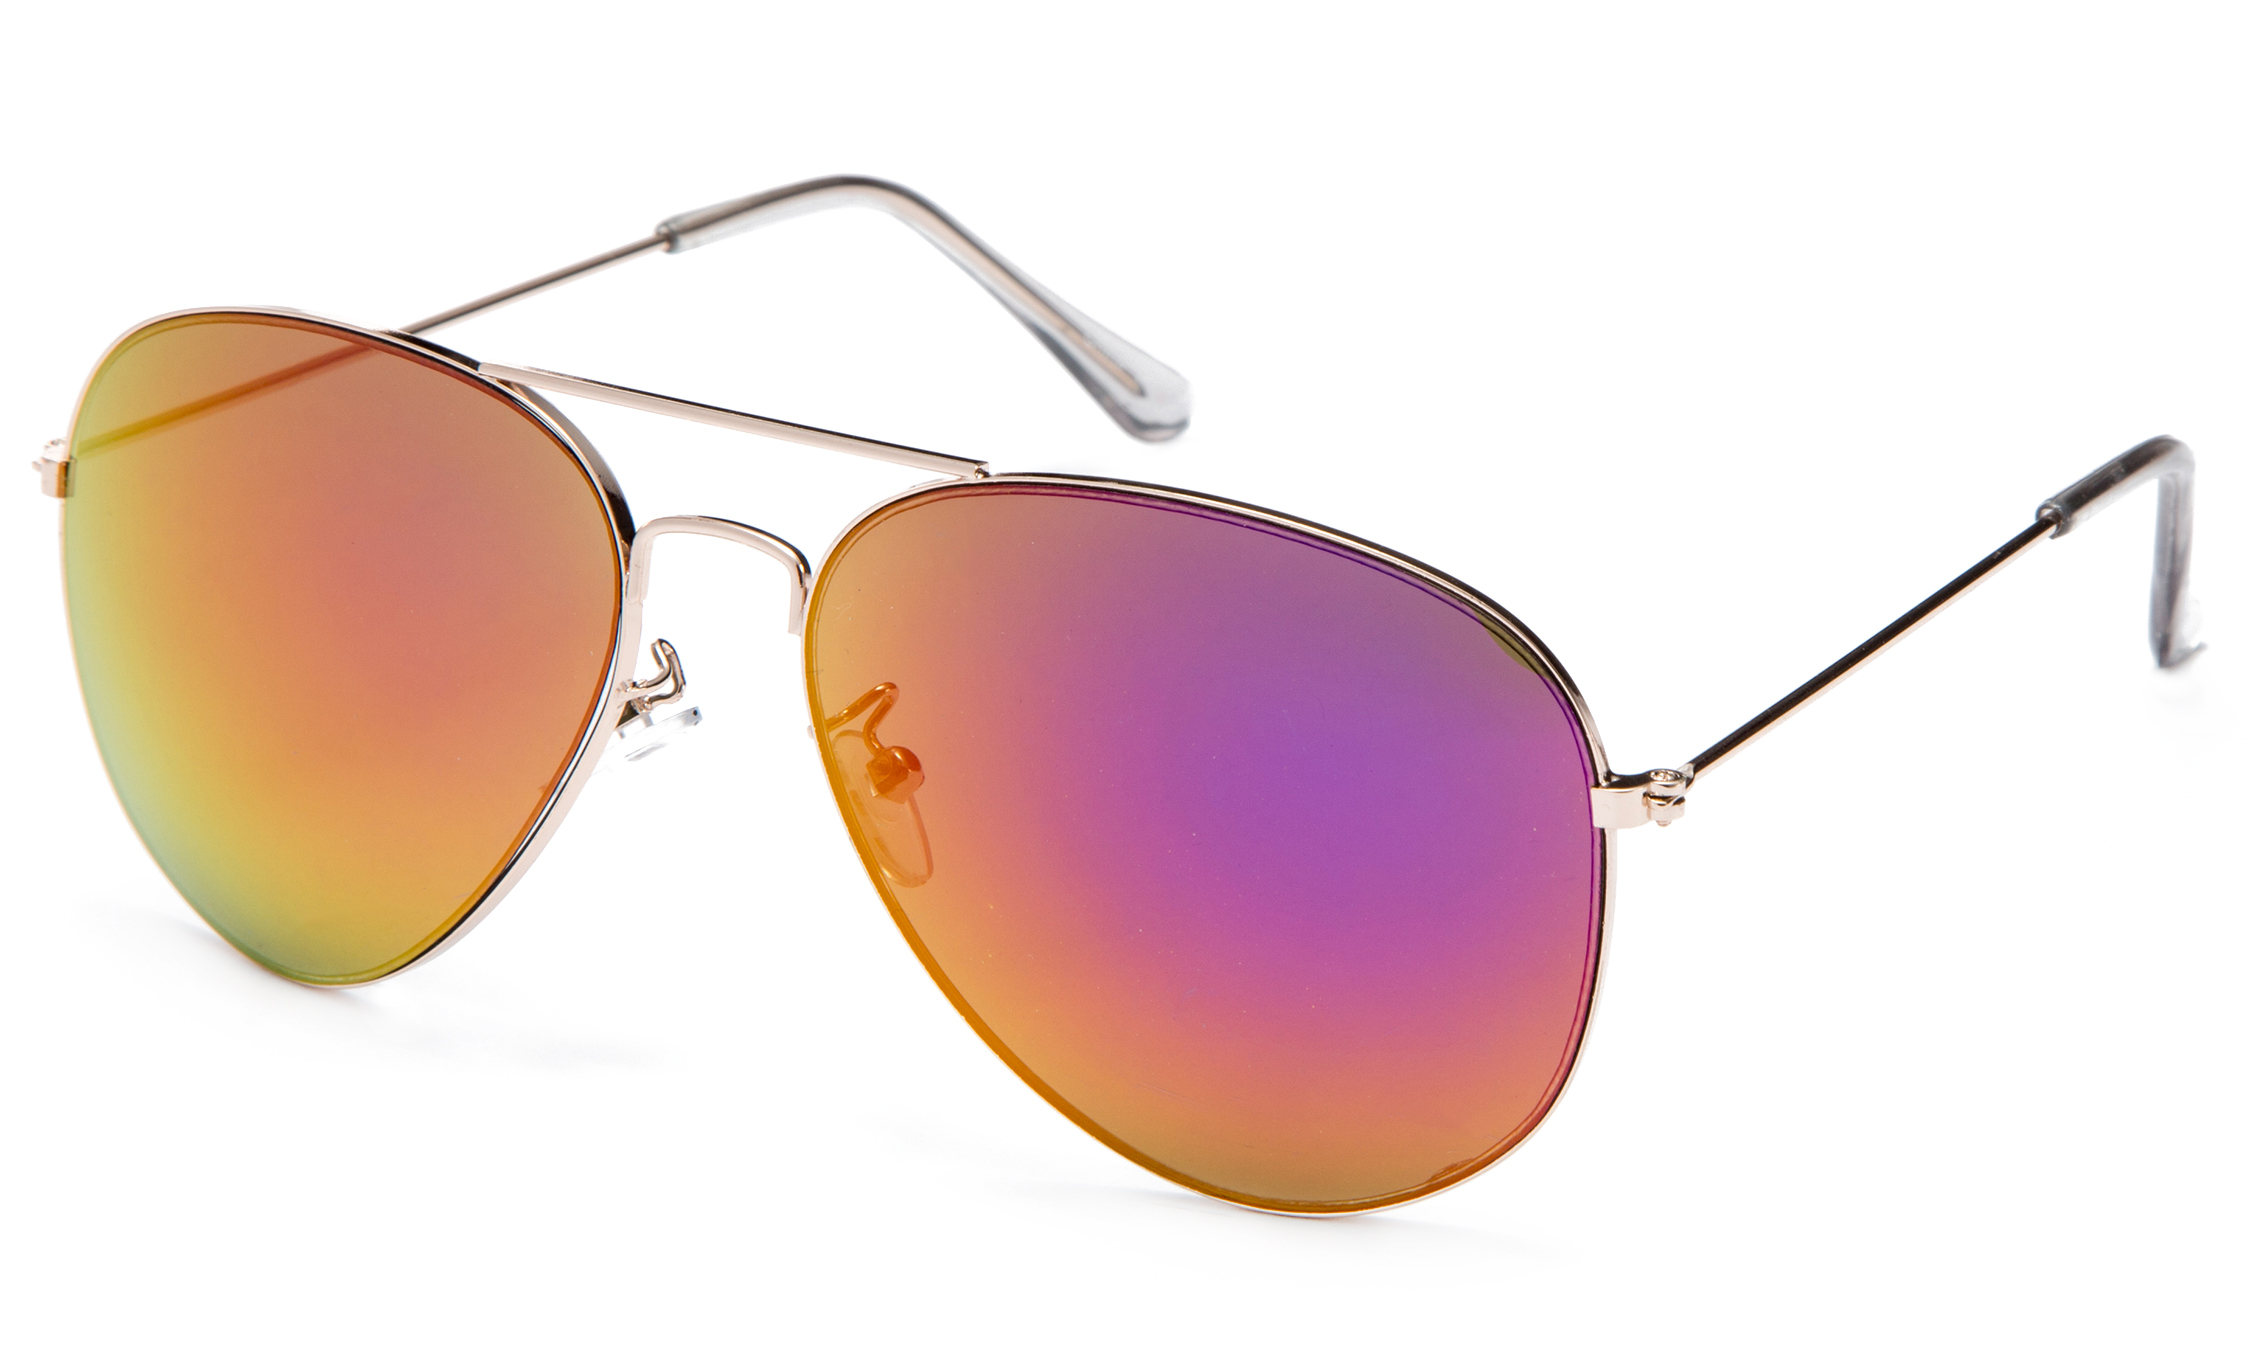 Newbee Fashion- Classic Aviator Sunglasses Flash Full Mirror lenses Slim Frame Super Light Weight for Men Women Clear Tip UV Protection - image 1 of 2